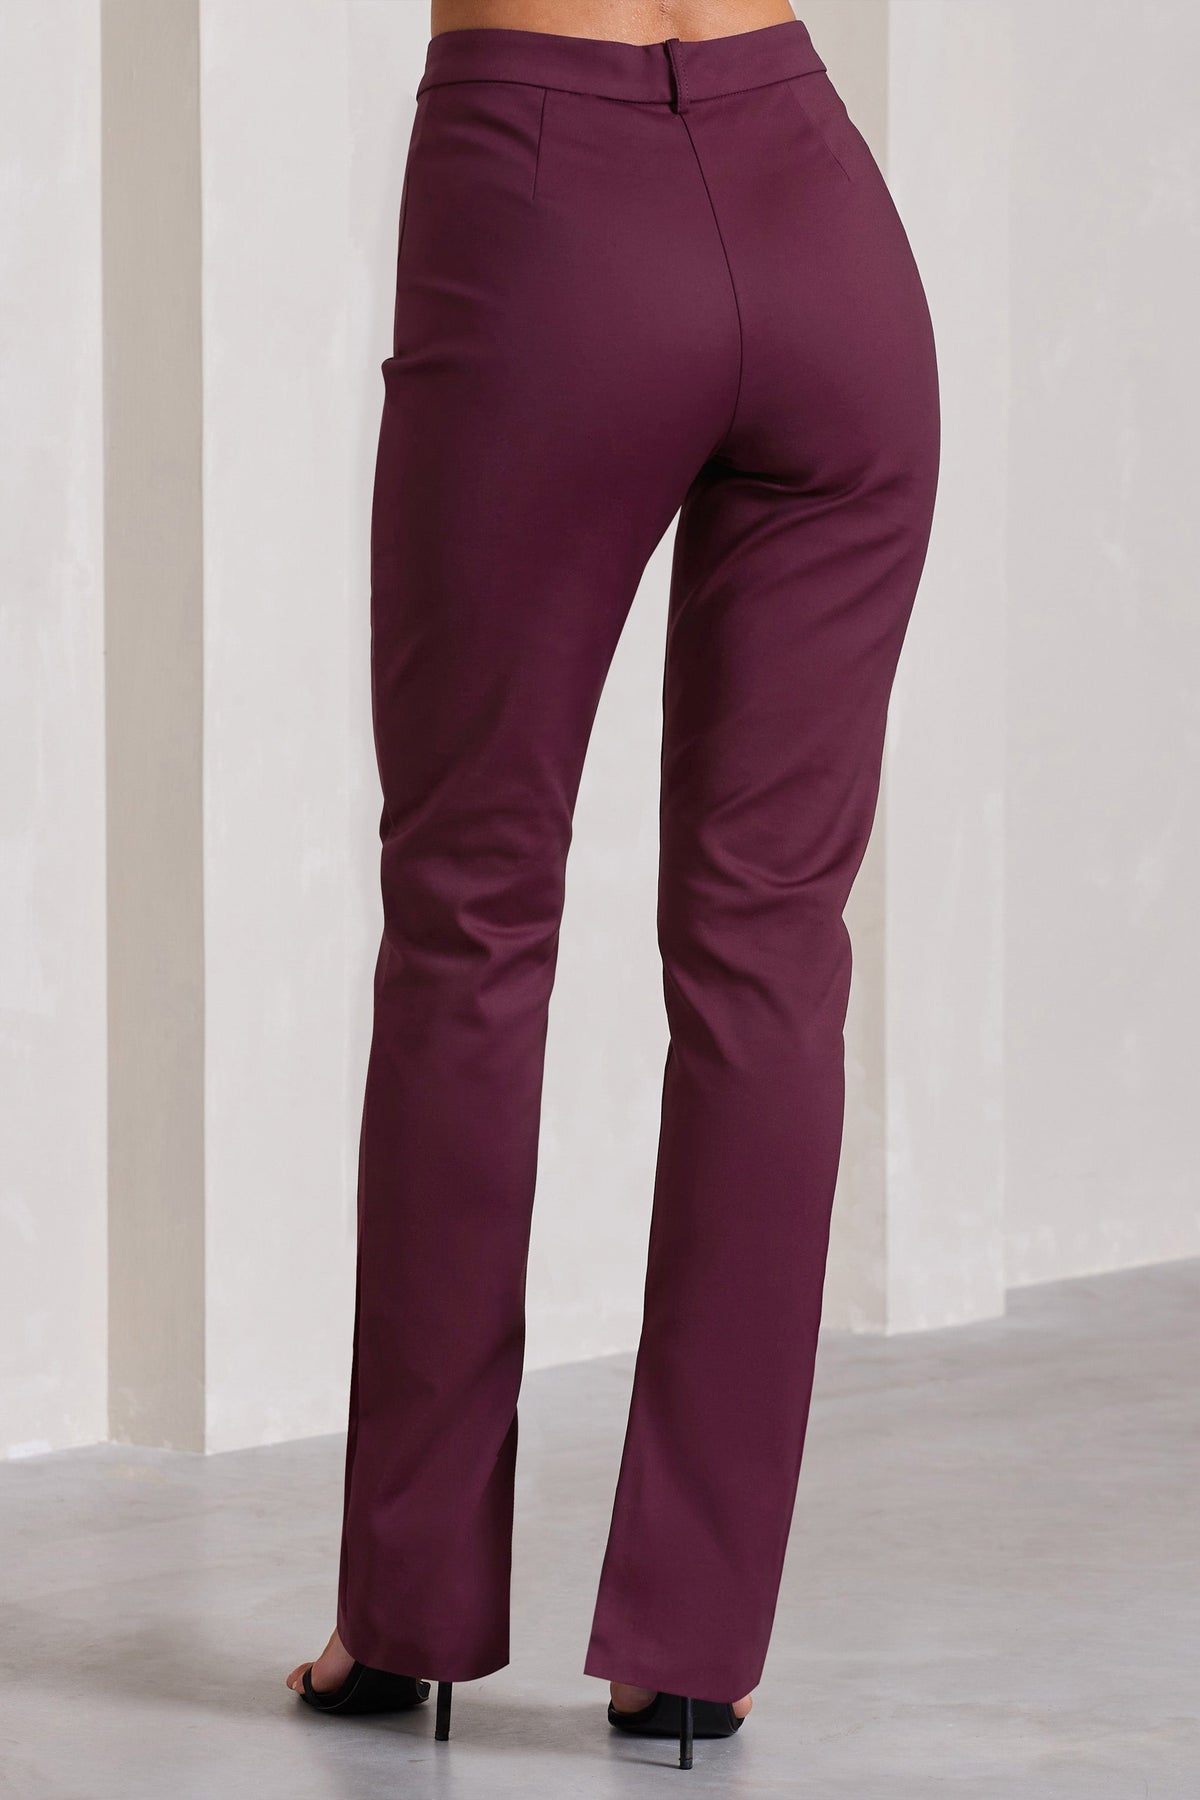 Wrangler Men's ATG Synthetic Relaxed Regular Fit Side Zip 5-Pocket Pants -  Brown, 32X30 - Walmart.com